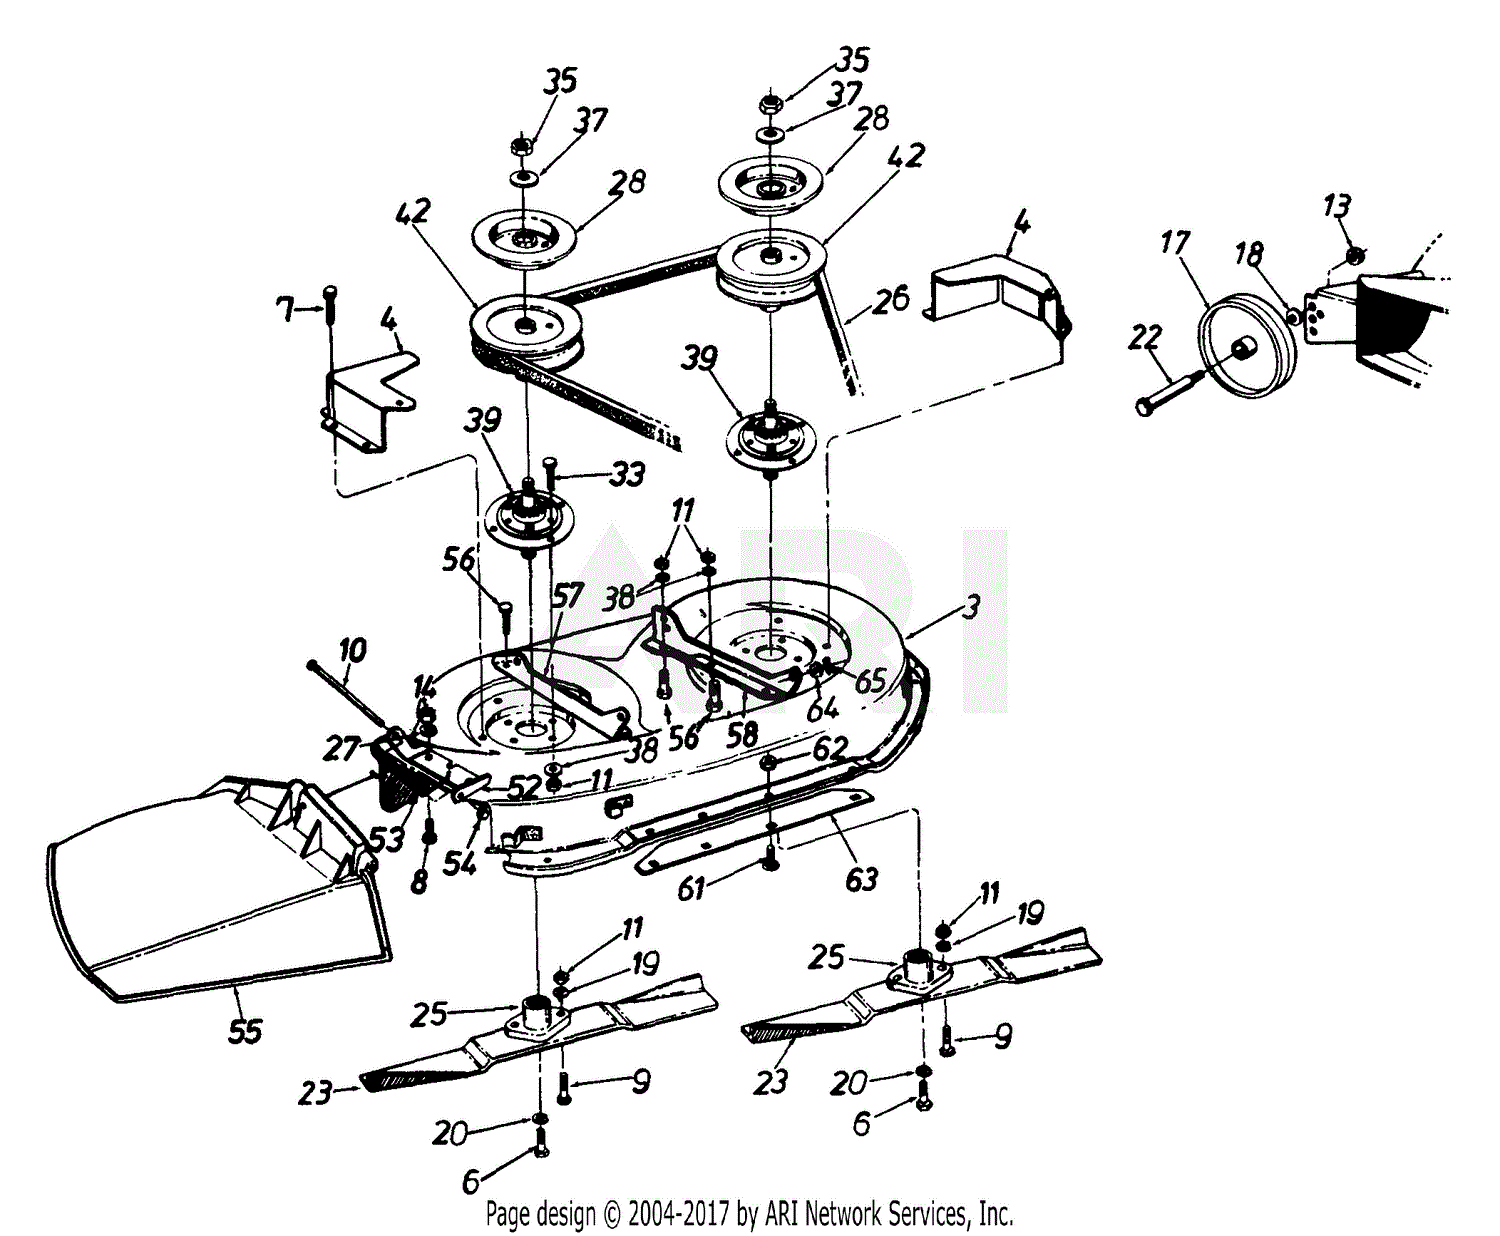 White riding mower belt diagram